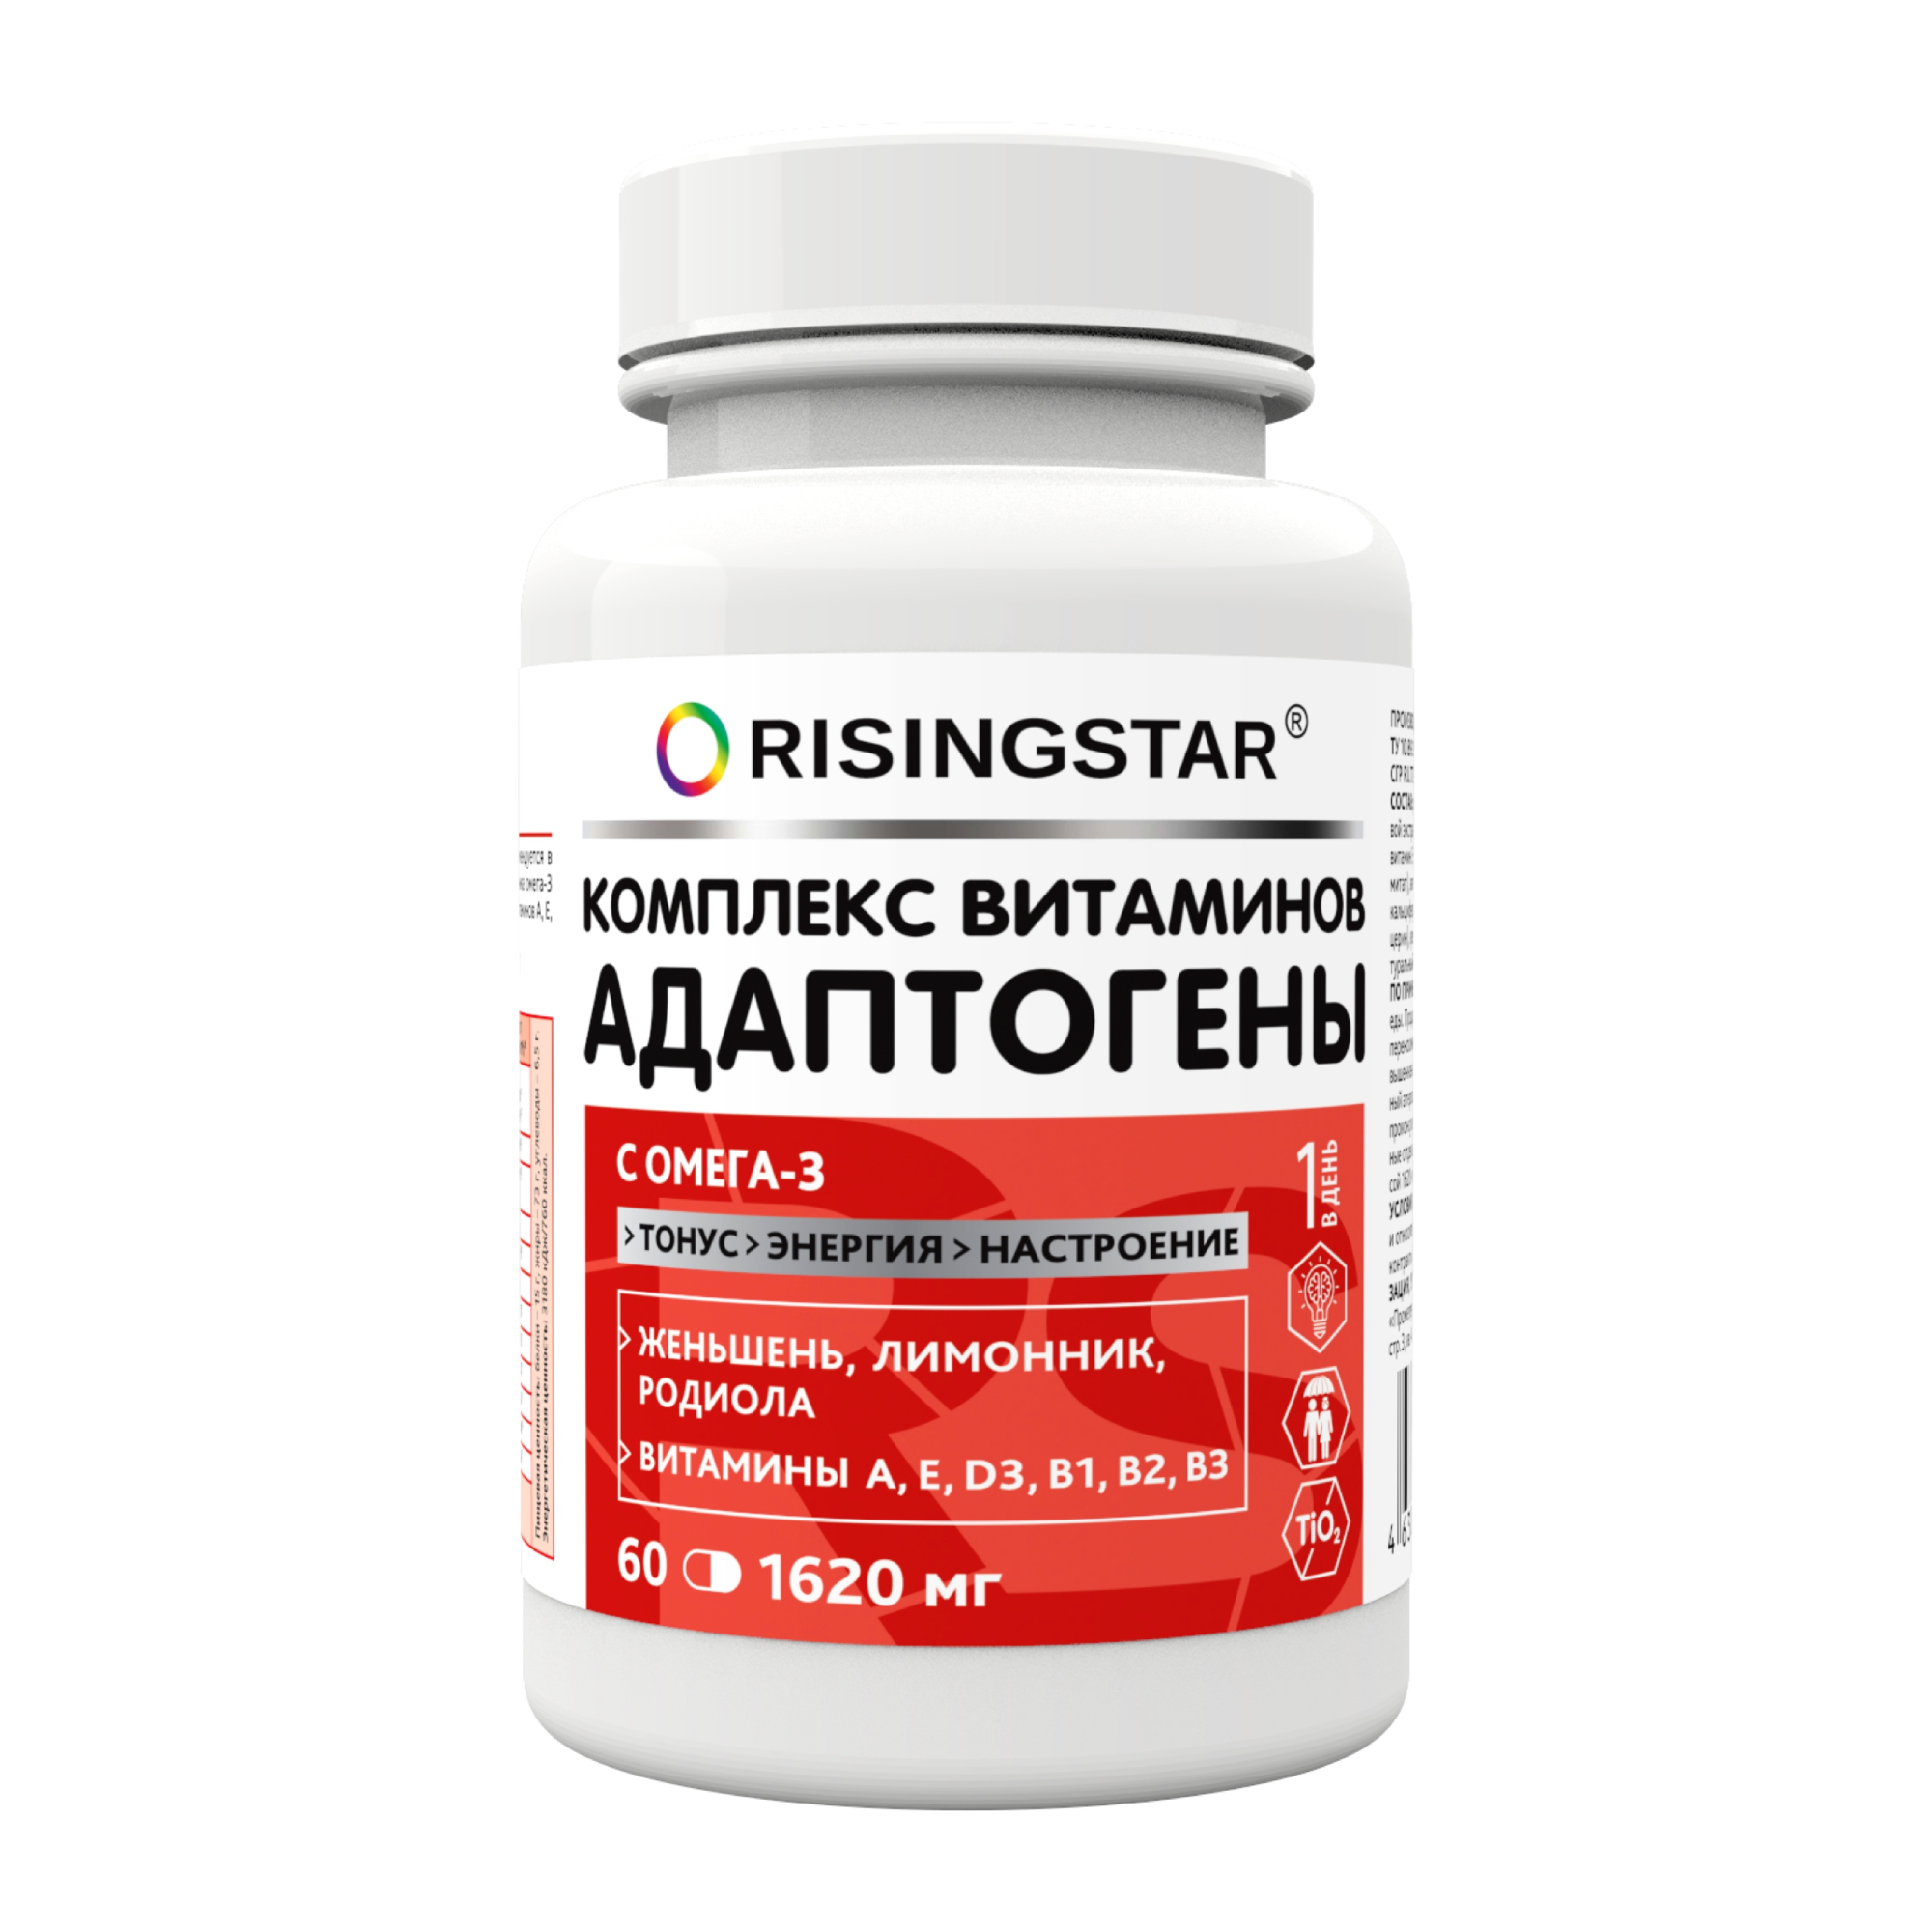 БАД Risingstar комплекс витаминов адаптогены с омега-3 60 таблеток, 100 г бад risingstar биотин фолиевая кислота с омега 3 для женщин 60 таблеток 100 г